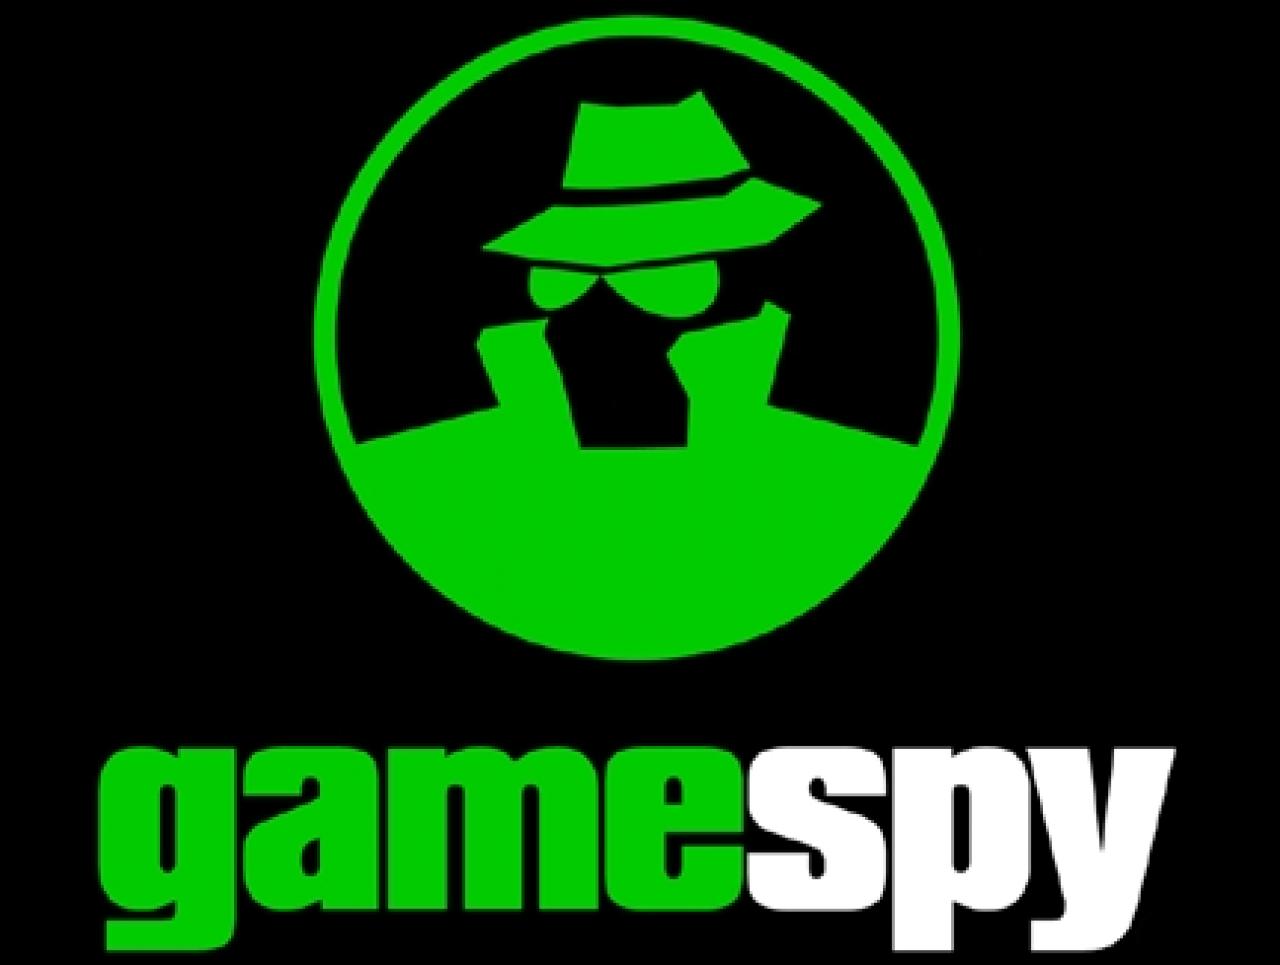 Gamespy Logo photo - 1